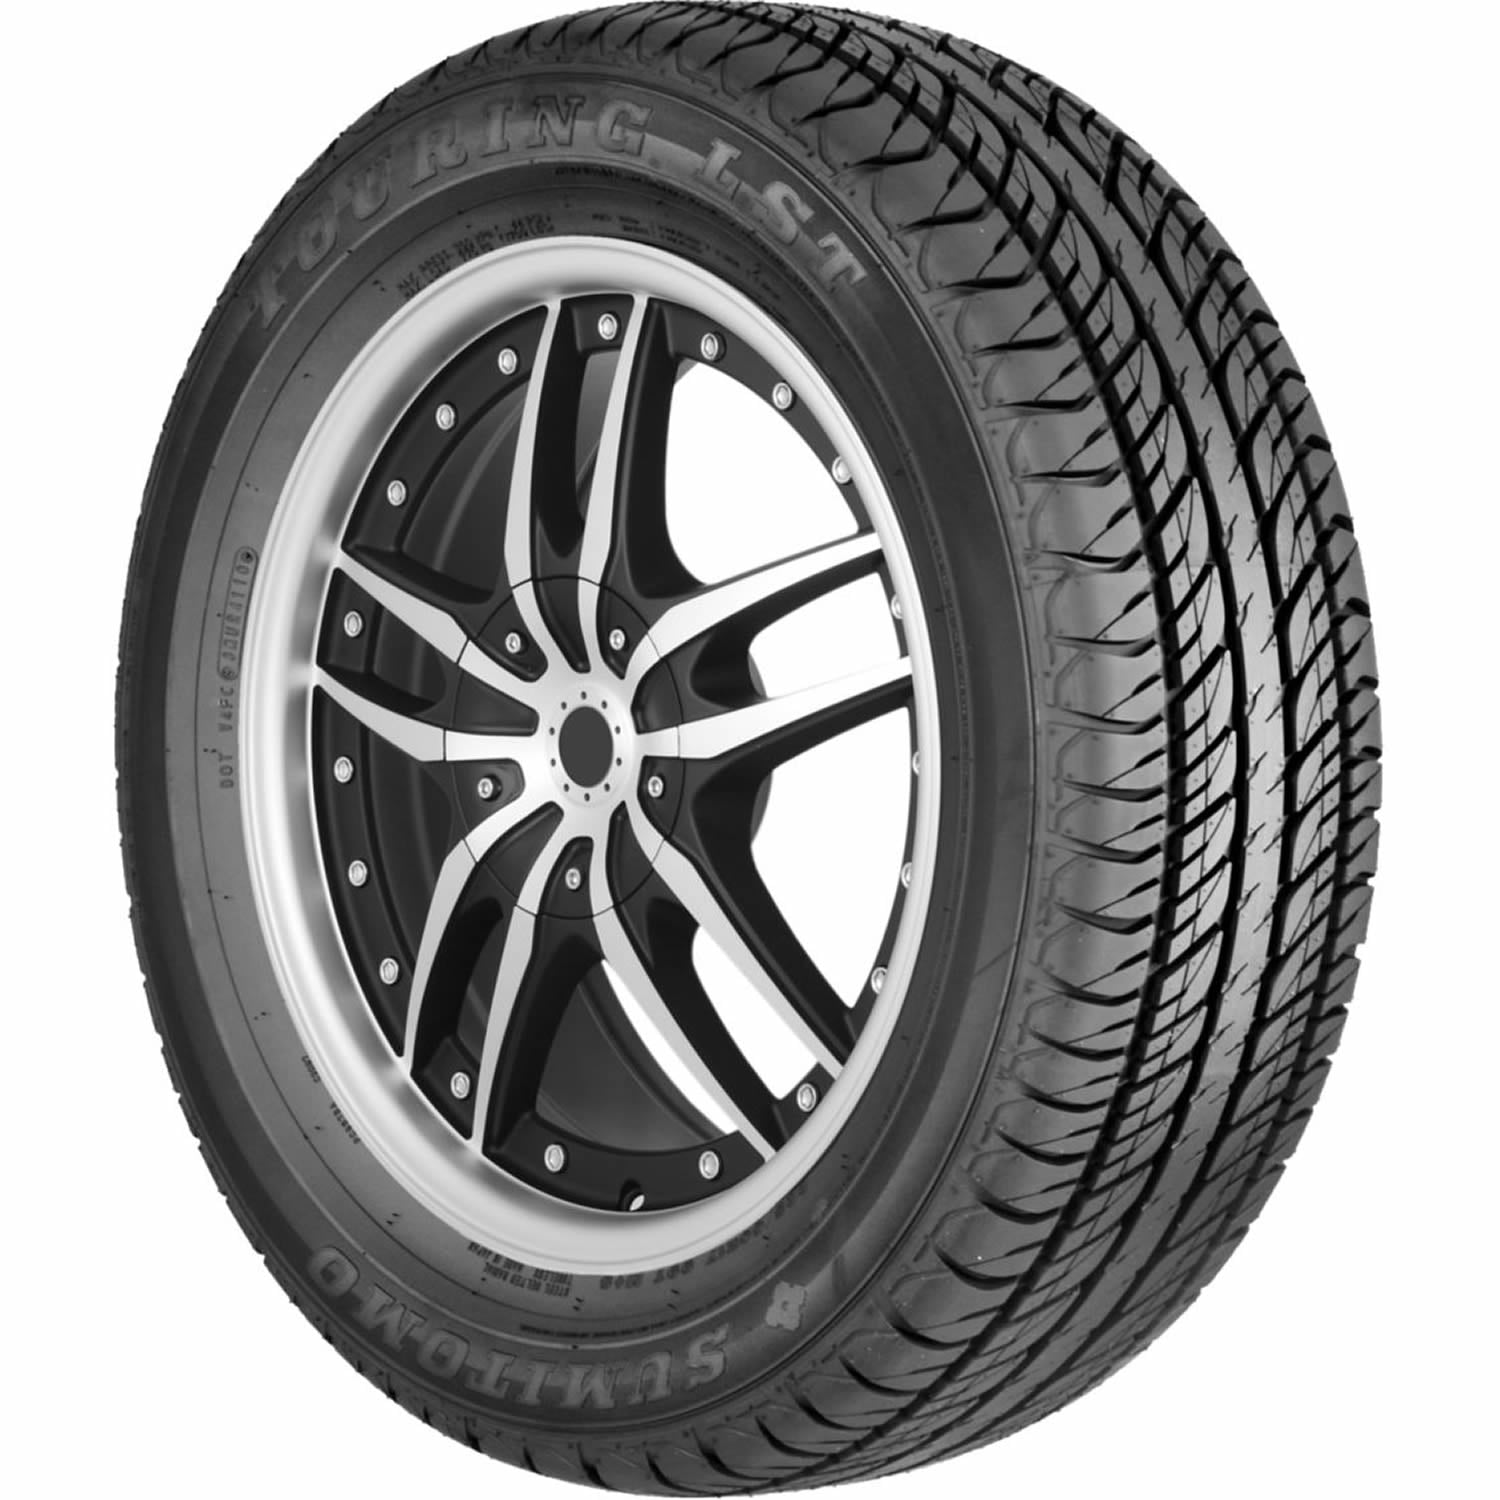 SUMITOMO TOURING LS 205/65R15 (25.7X8.2R 15) Tires